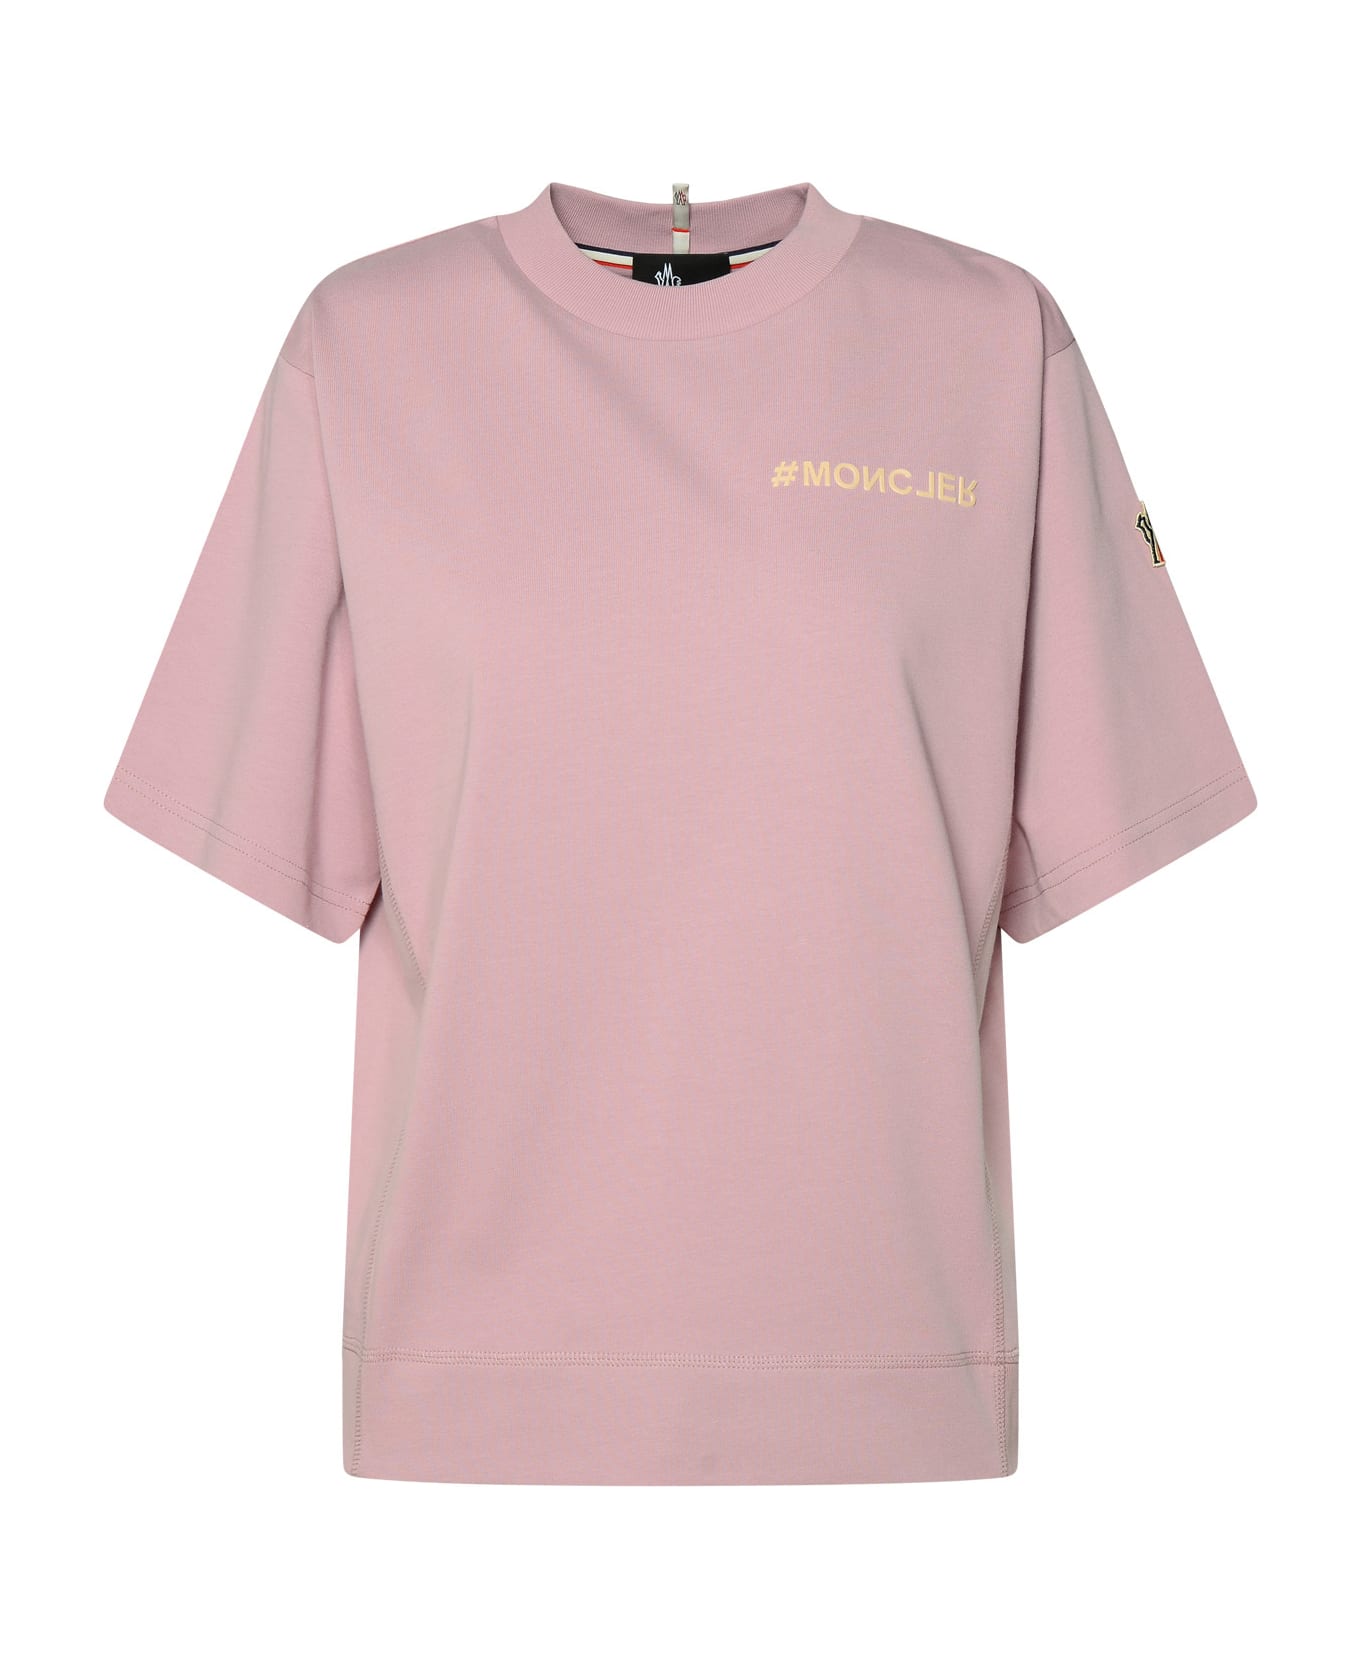 Moncler Grenoble Pink Cotton T-shirt - PINK